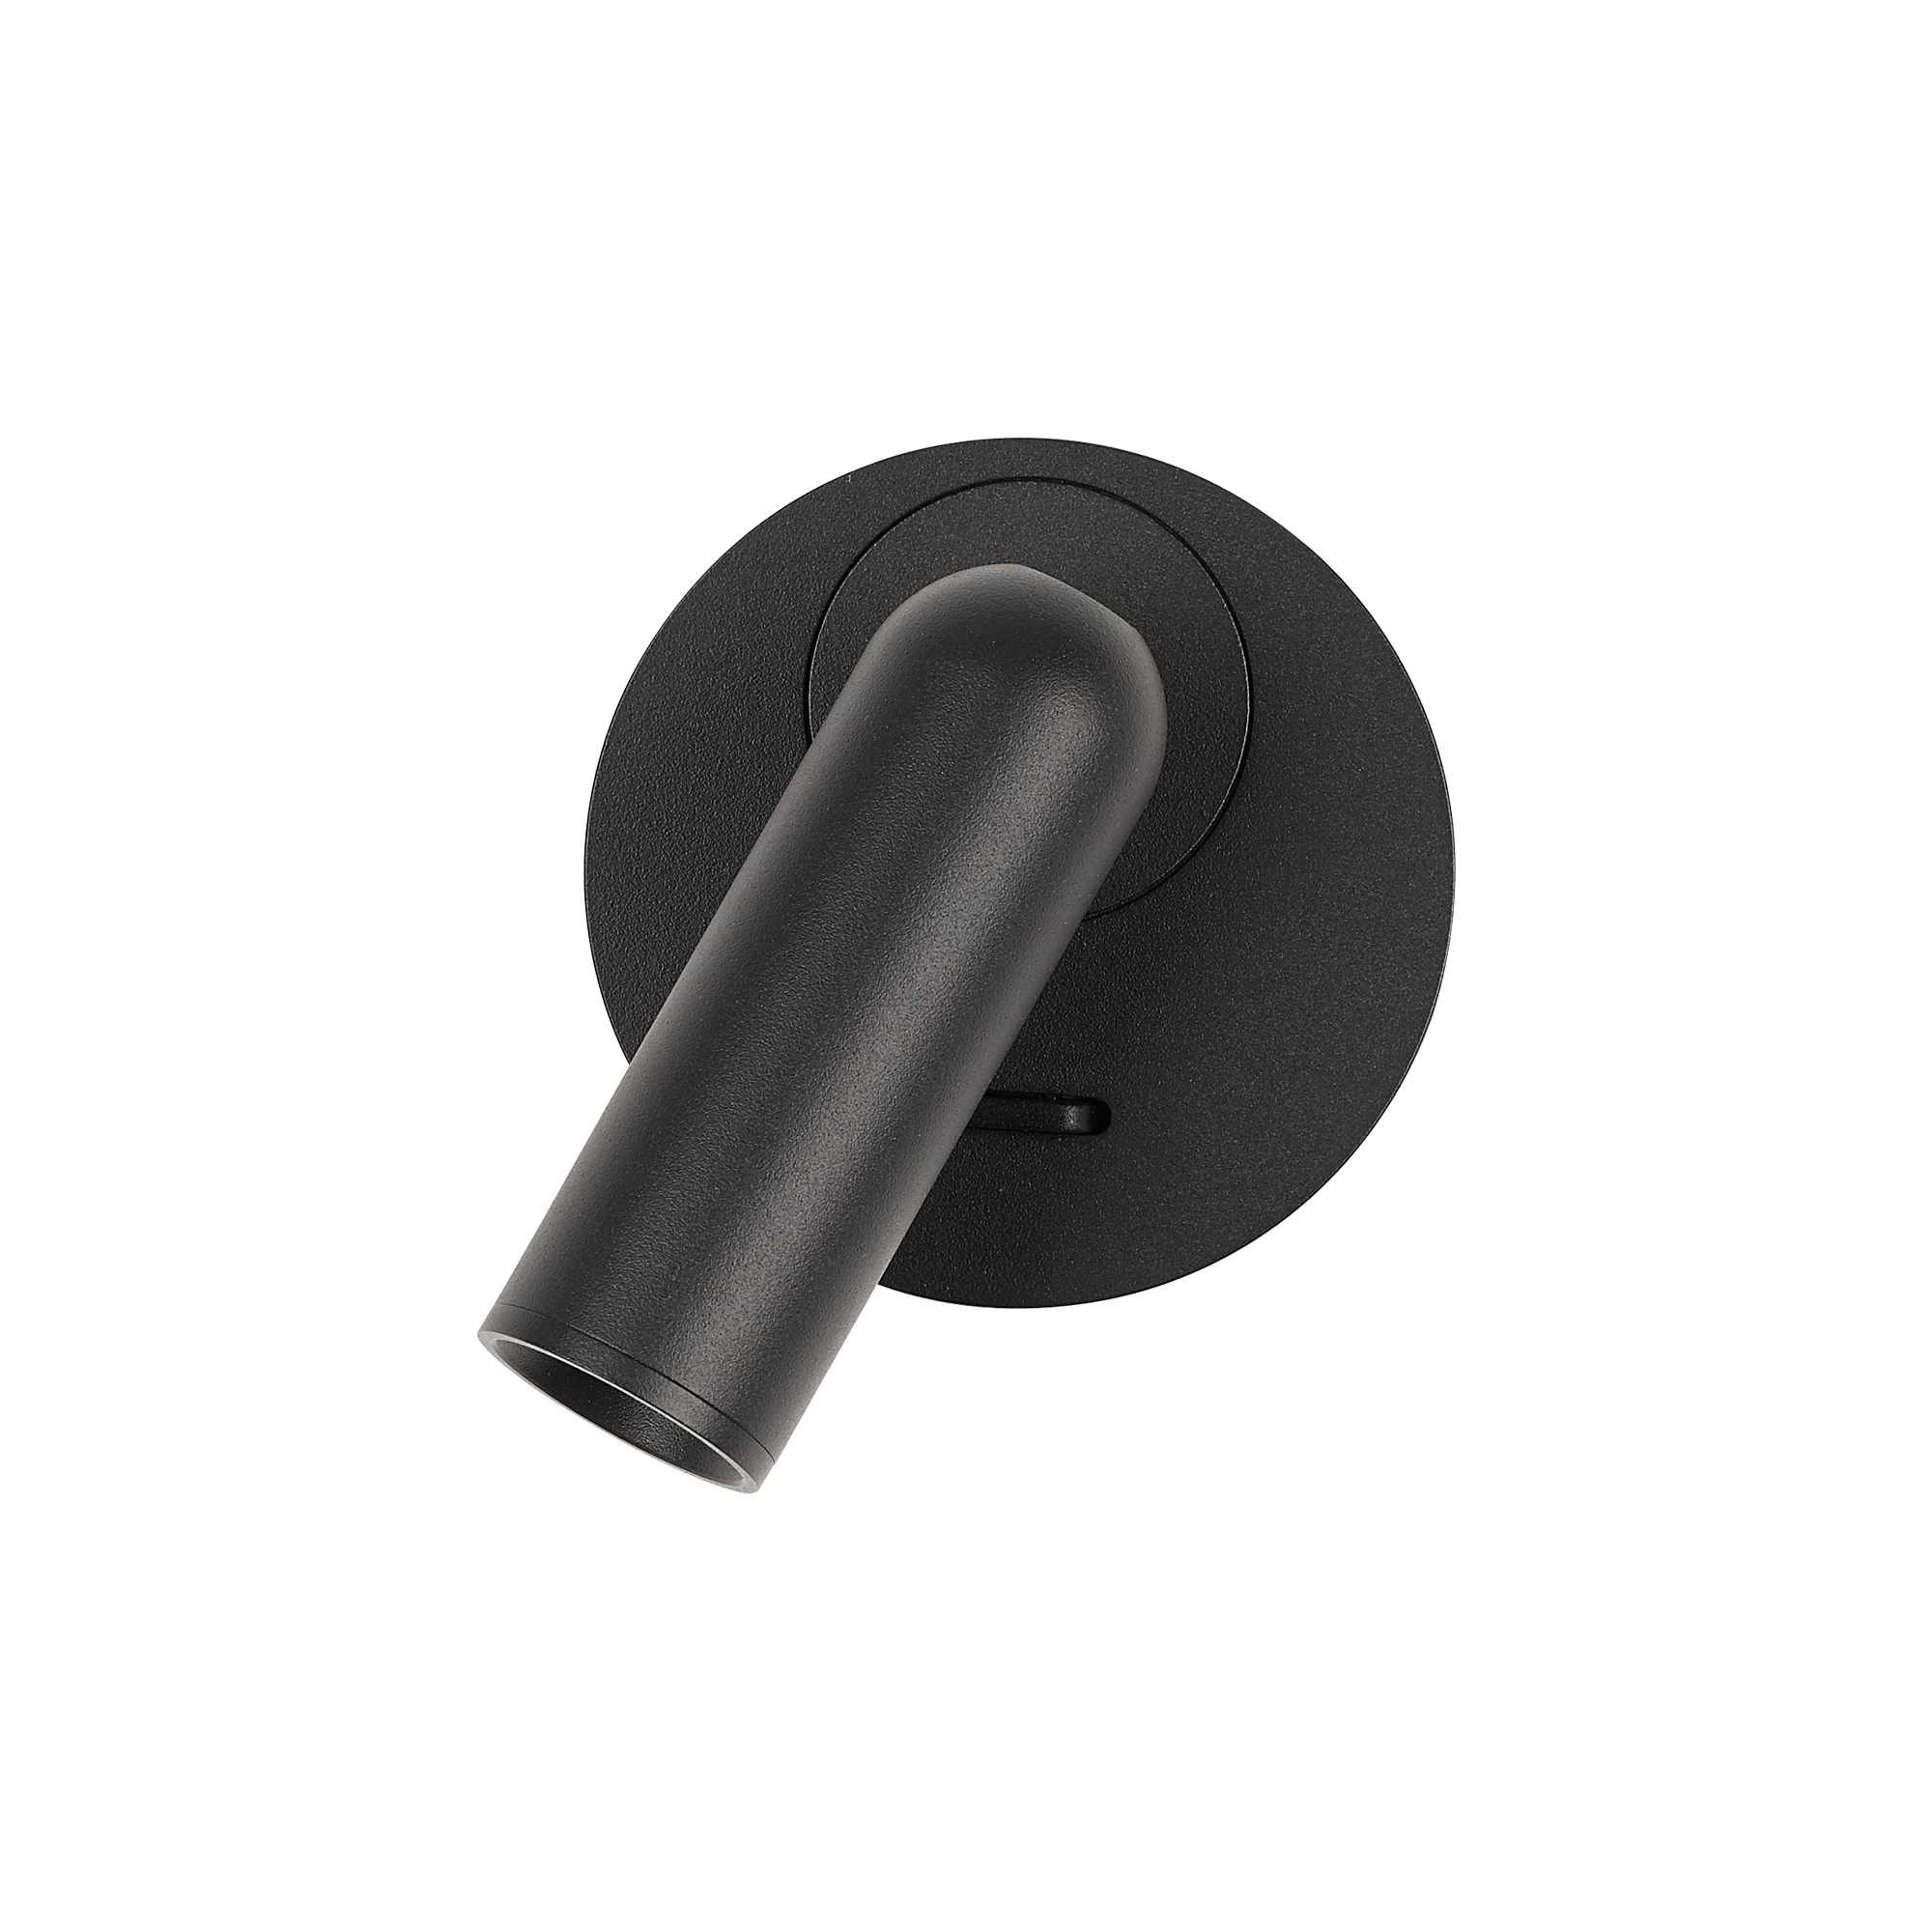 AD hotelska oprema Zidna lampa Bean ap (okrugla)- Crne boje slika proizvoda